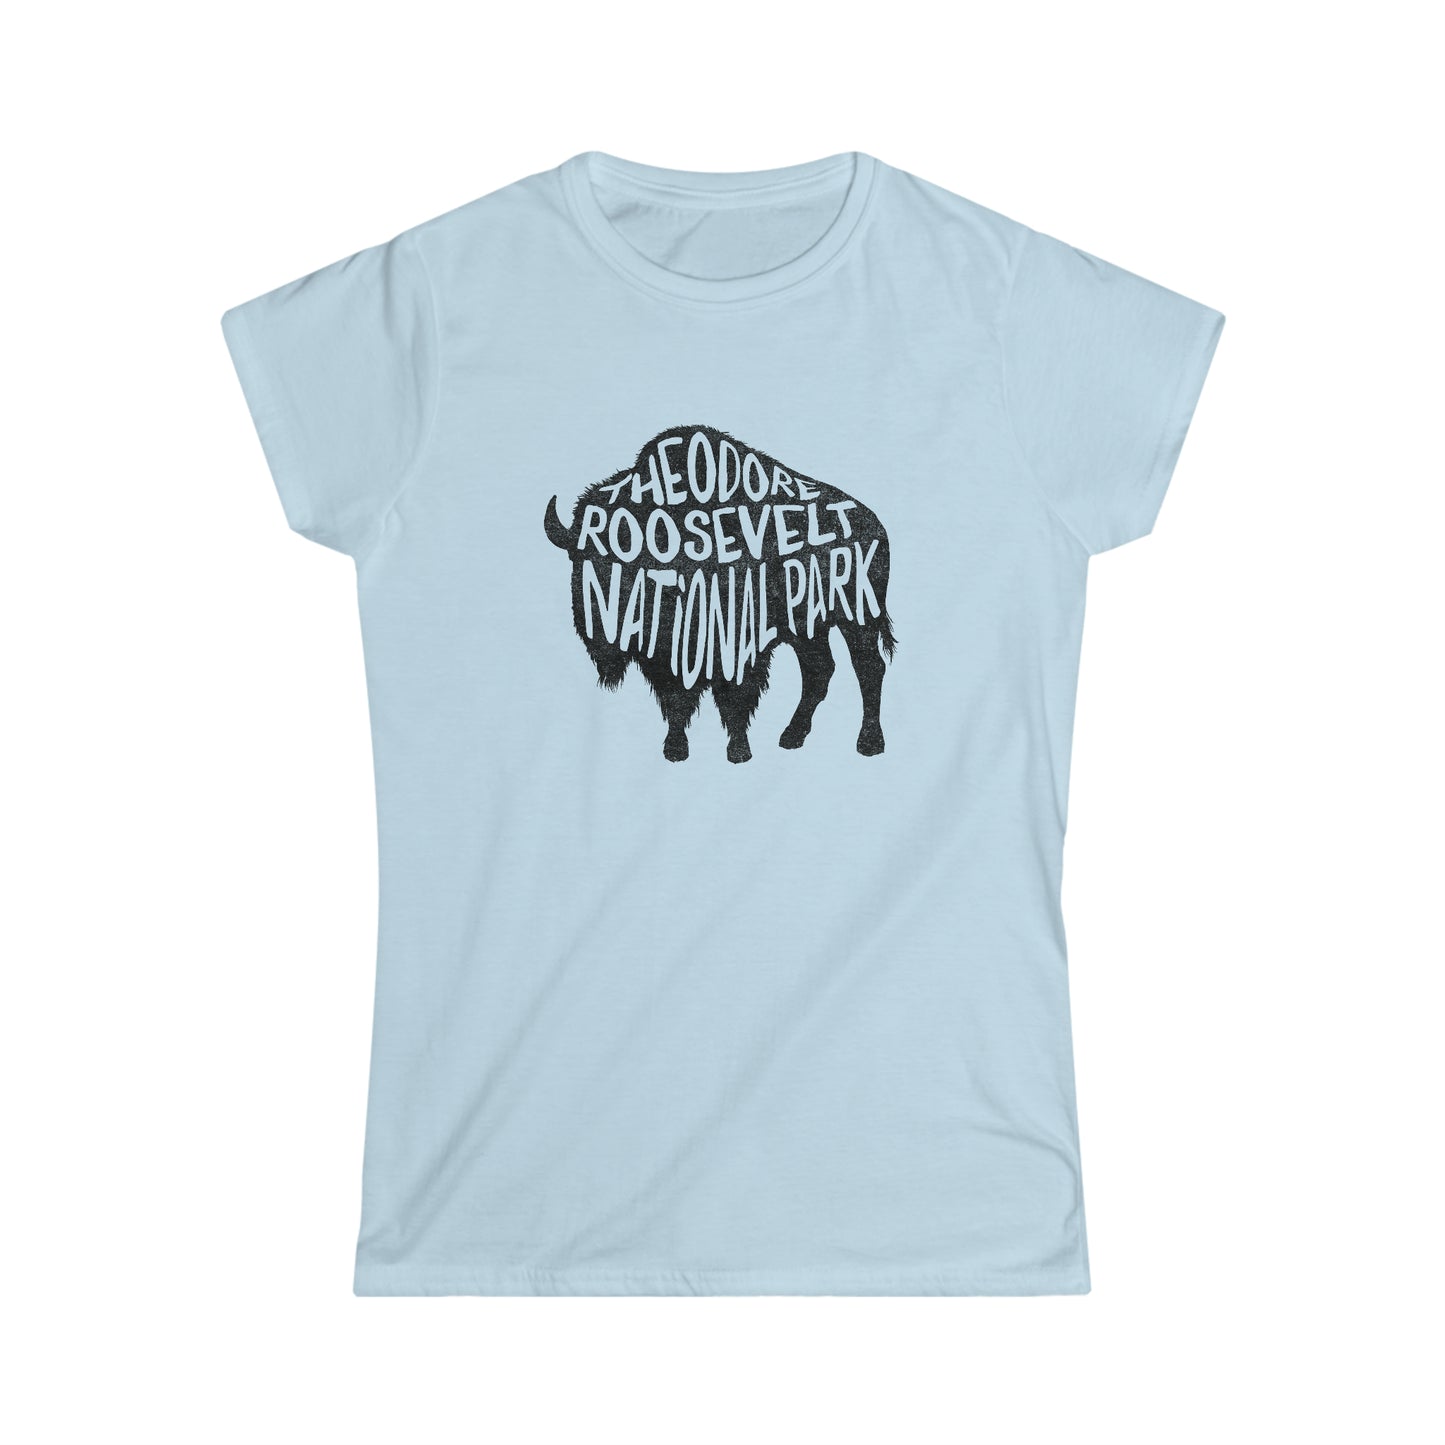 Theodore Roosevelt National Park Women's T-Shirt - Bison